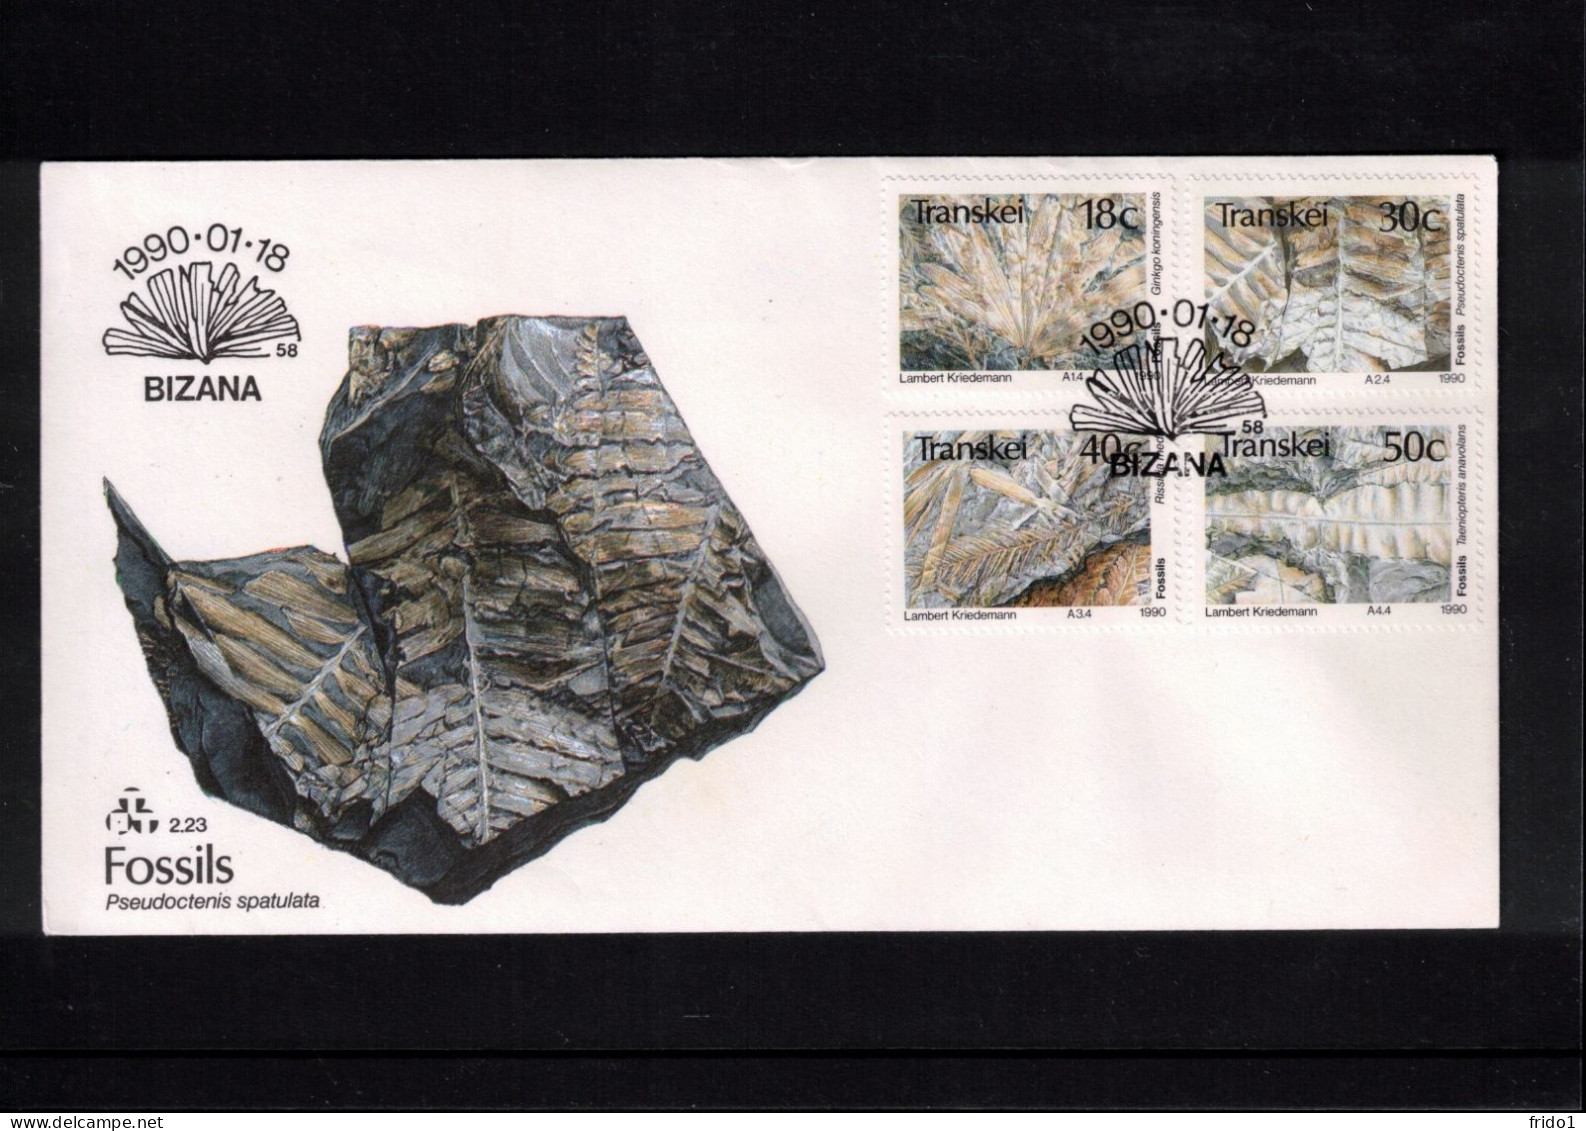 Transkei 1990 Fossils FDC - Fossils